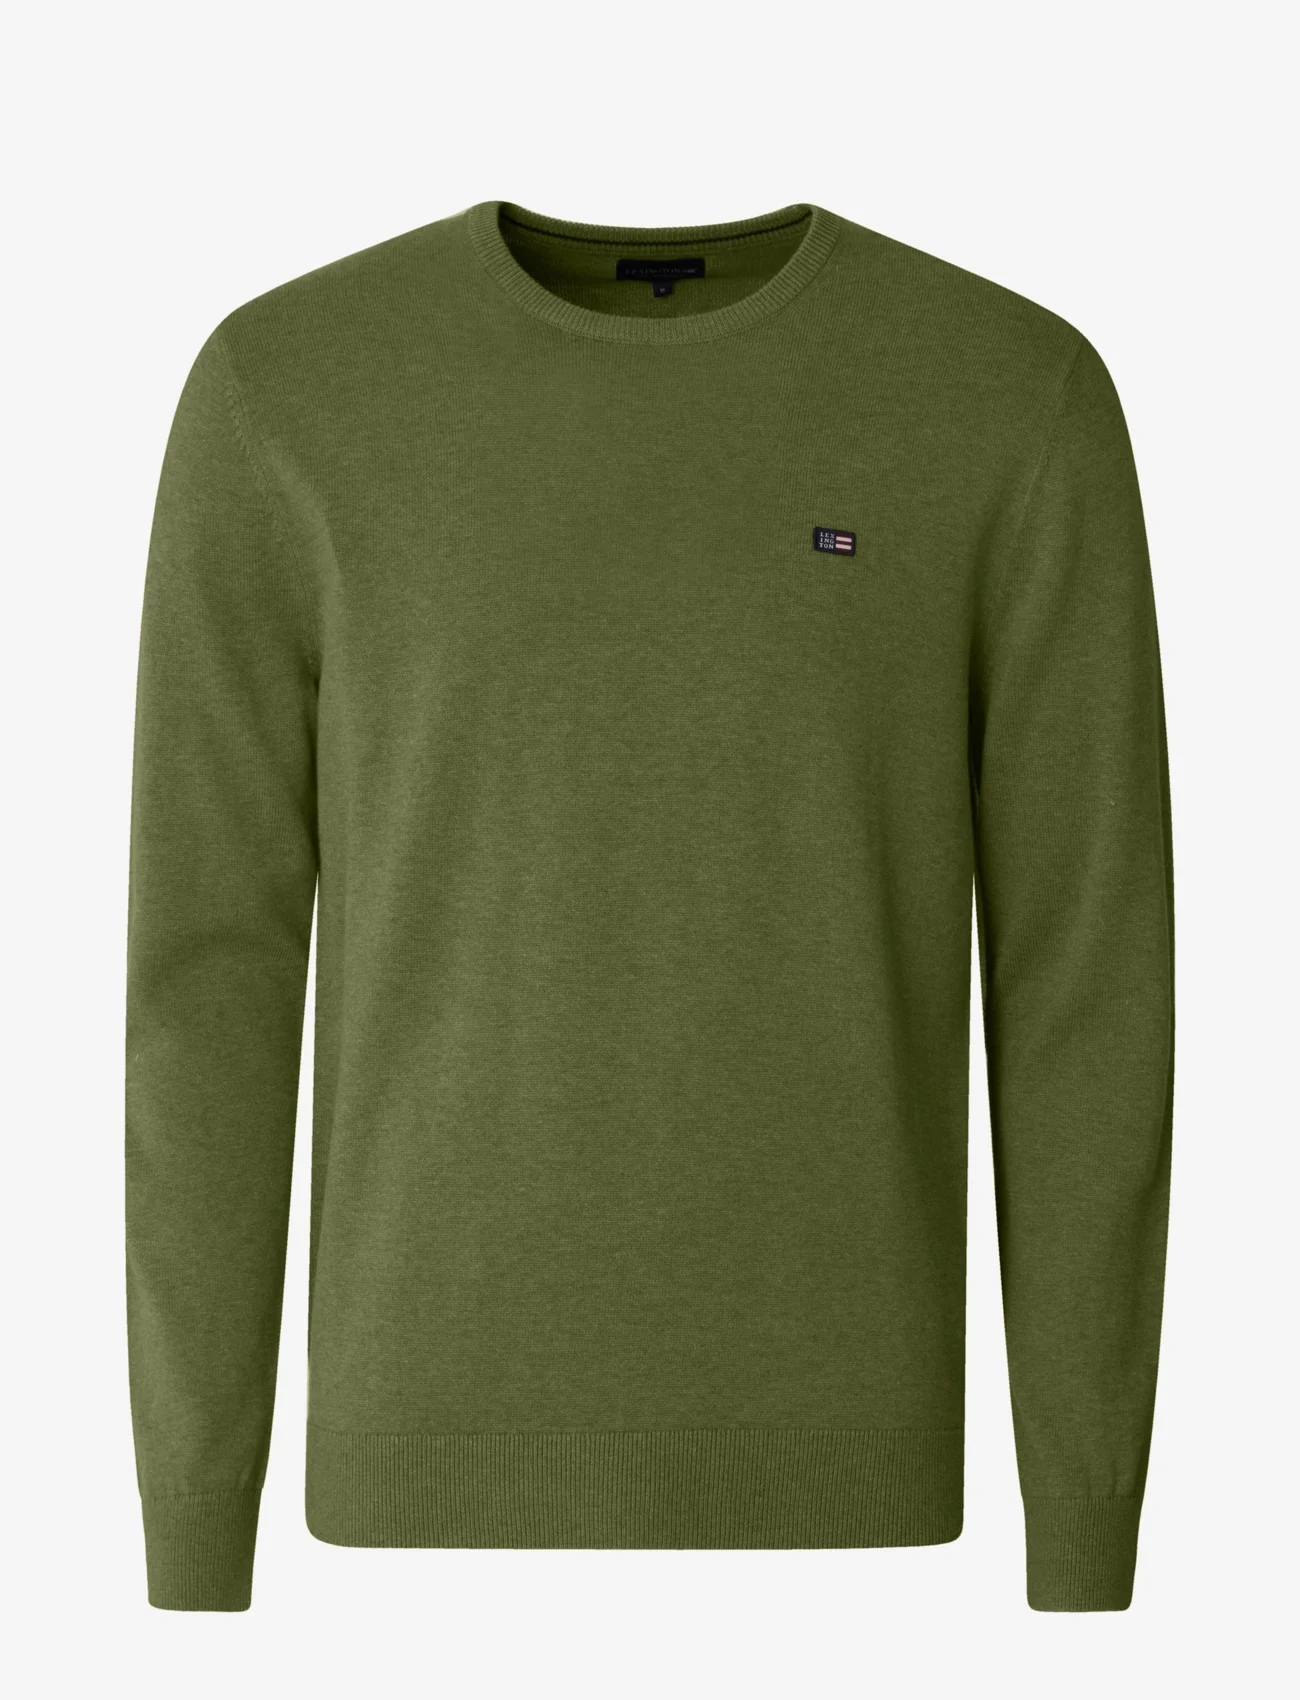 Lexington Clothing - Bradley Cotton Crew Sweater - knitted round necks - green - 0